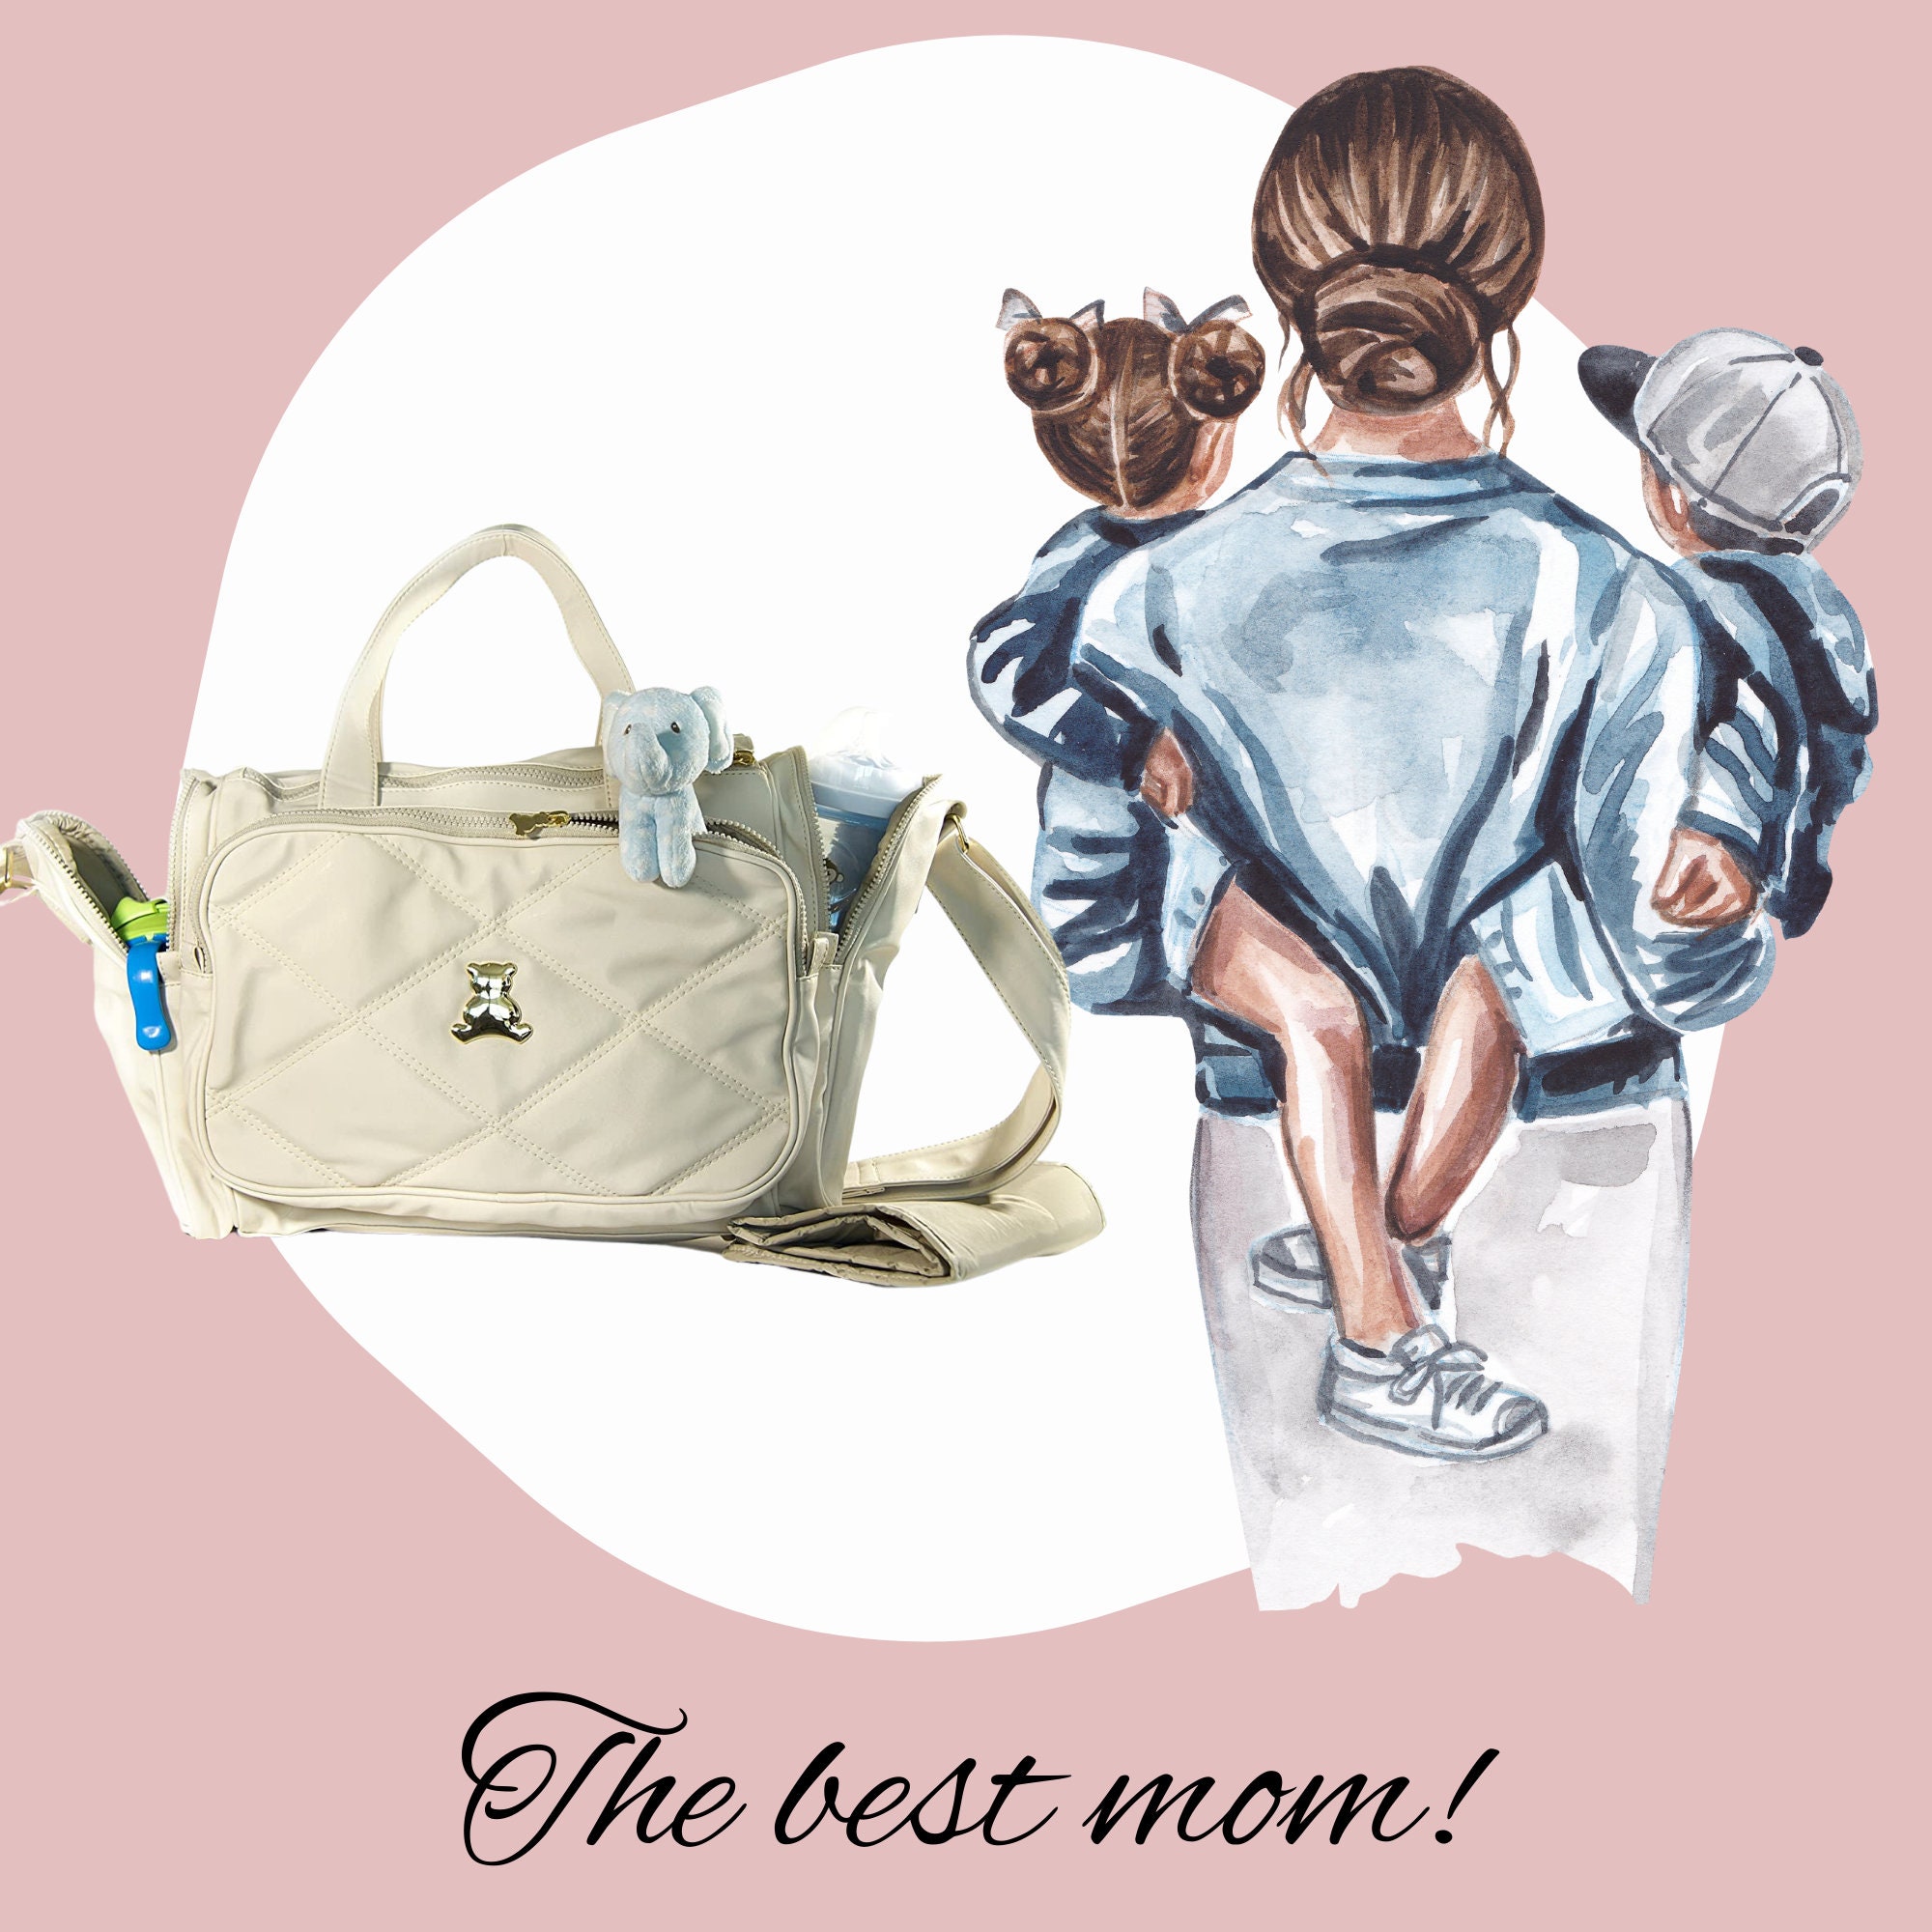 baby handbag for mom